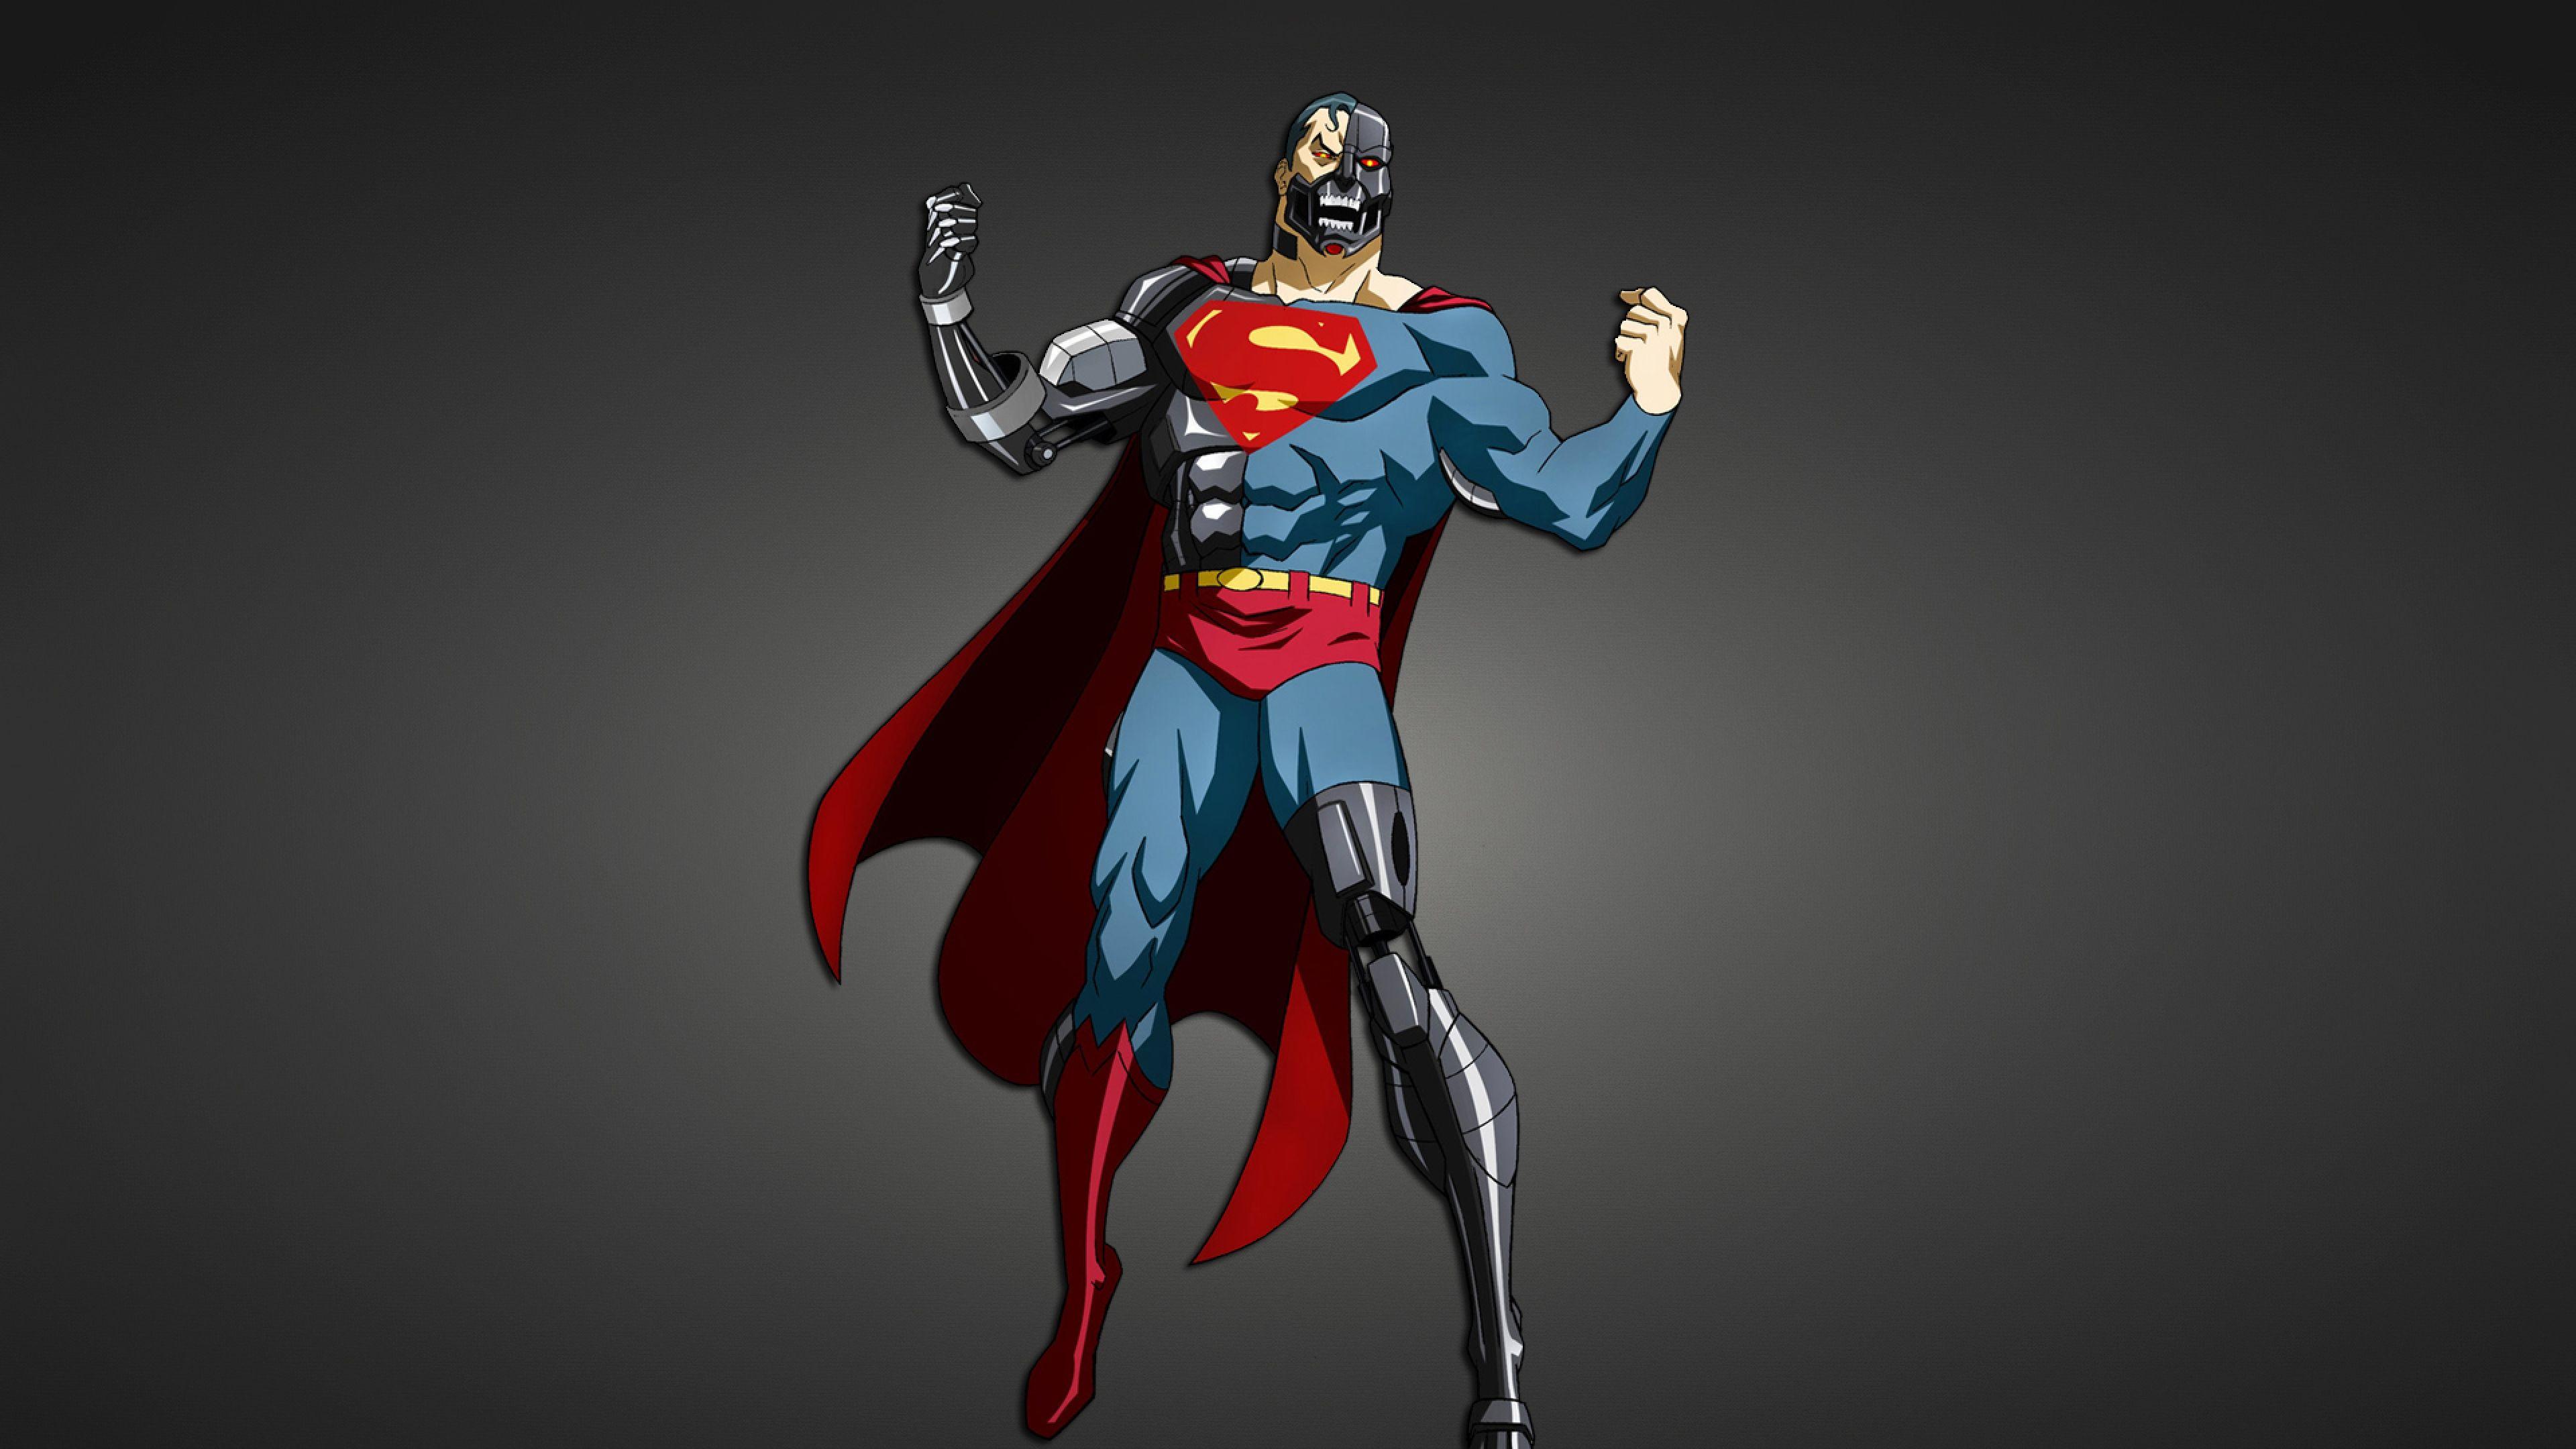 4K Superhero Wallpapers - Top Free 4K Superhero ...